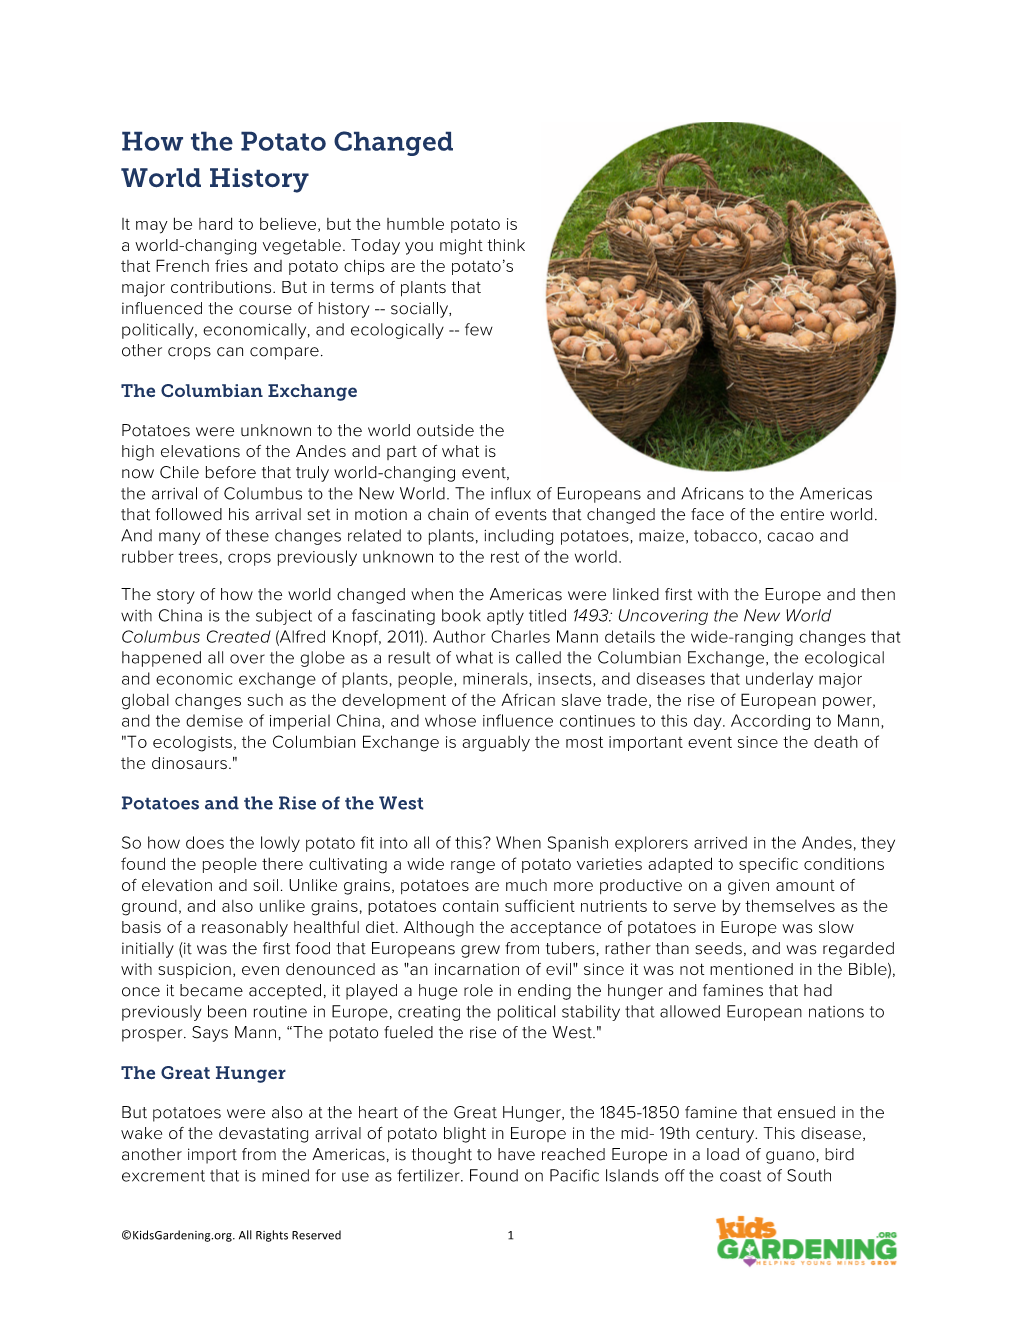 How the Potato Changed World History